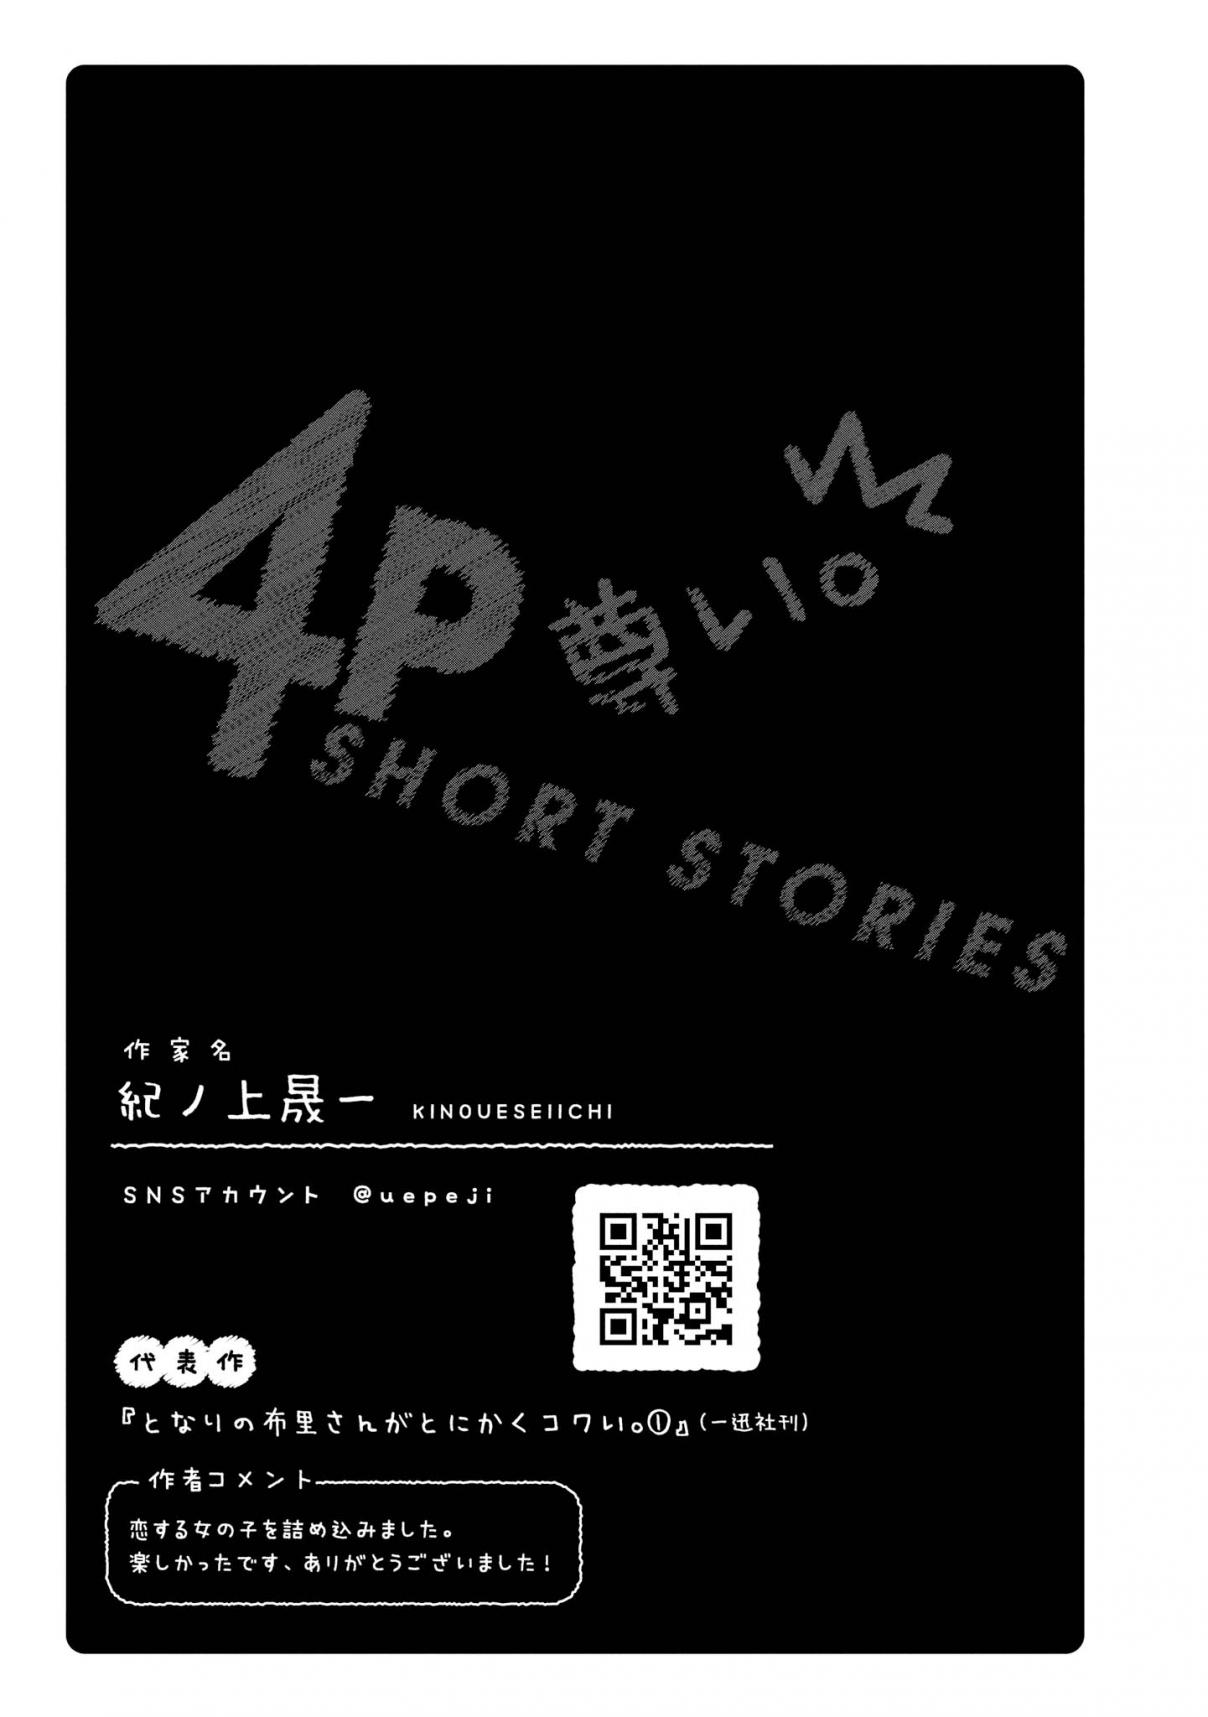 Precious 4p Short Stories Ch. 25 Positive Advancement [by Kinoue Seiichi]